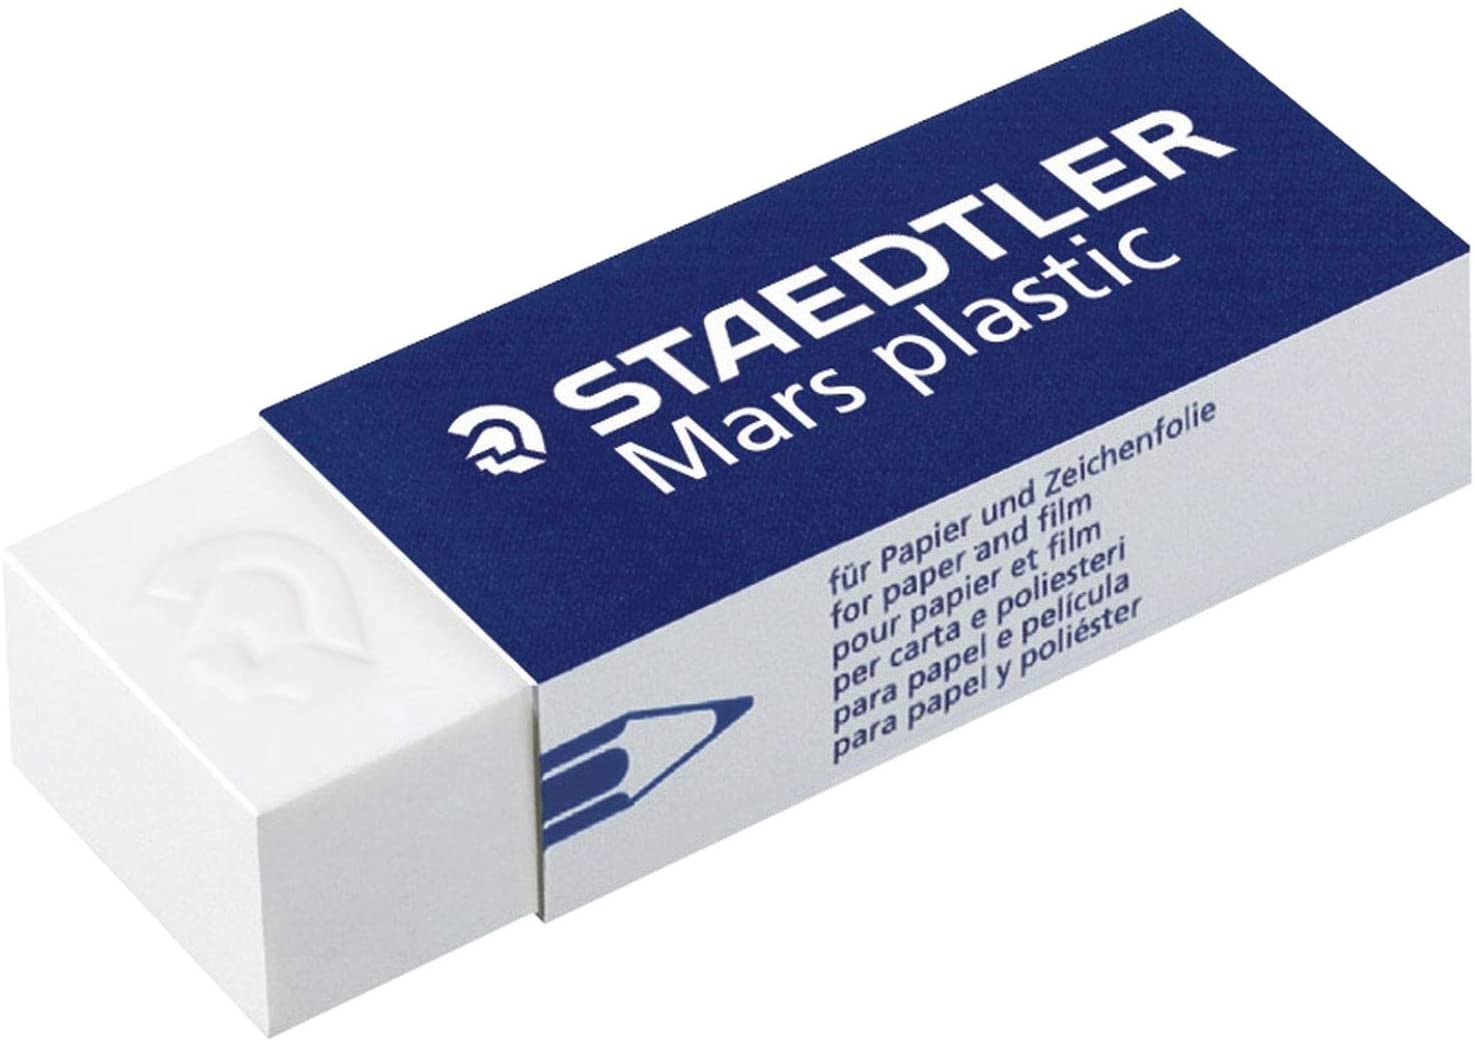 Staedtler Mars Erasers single piece